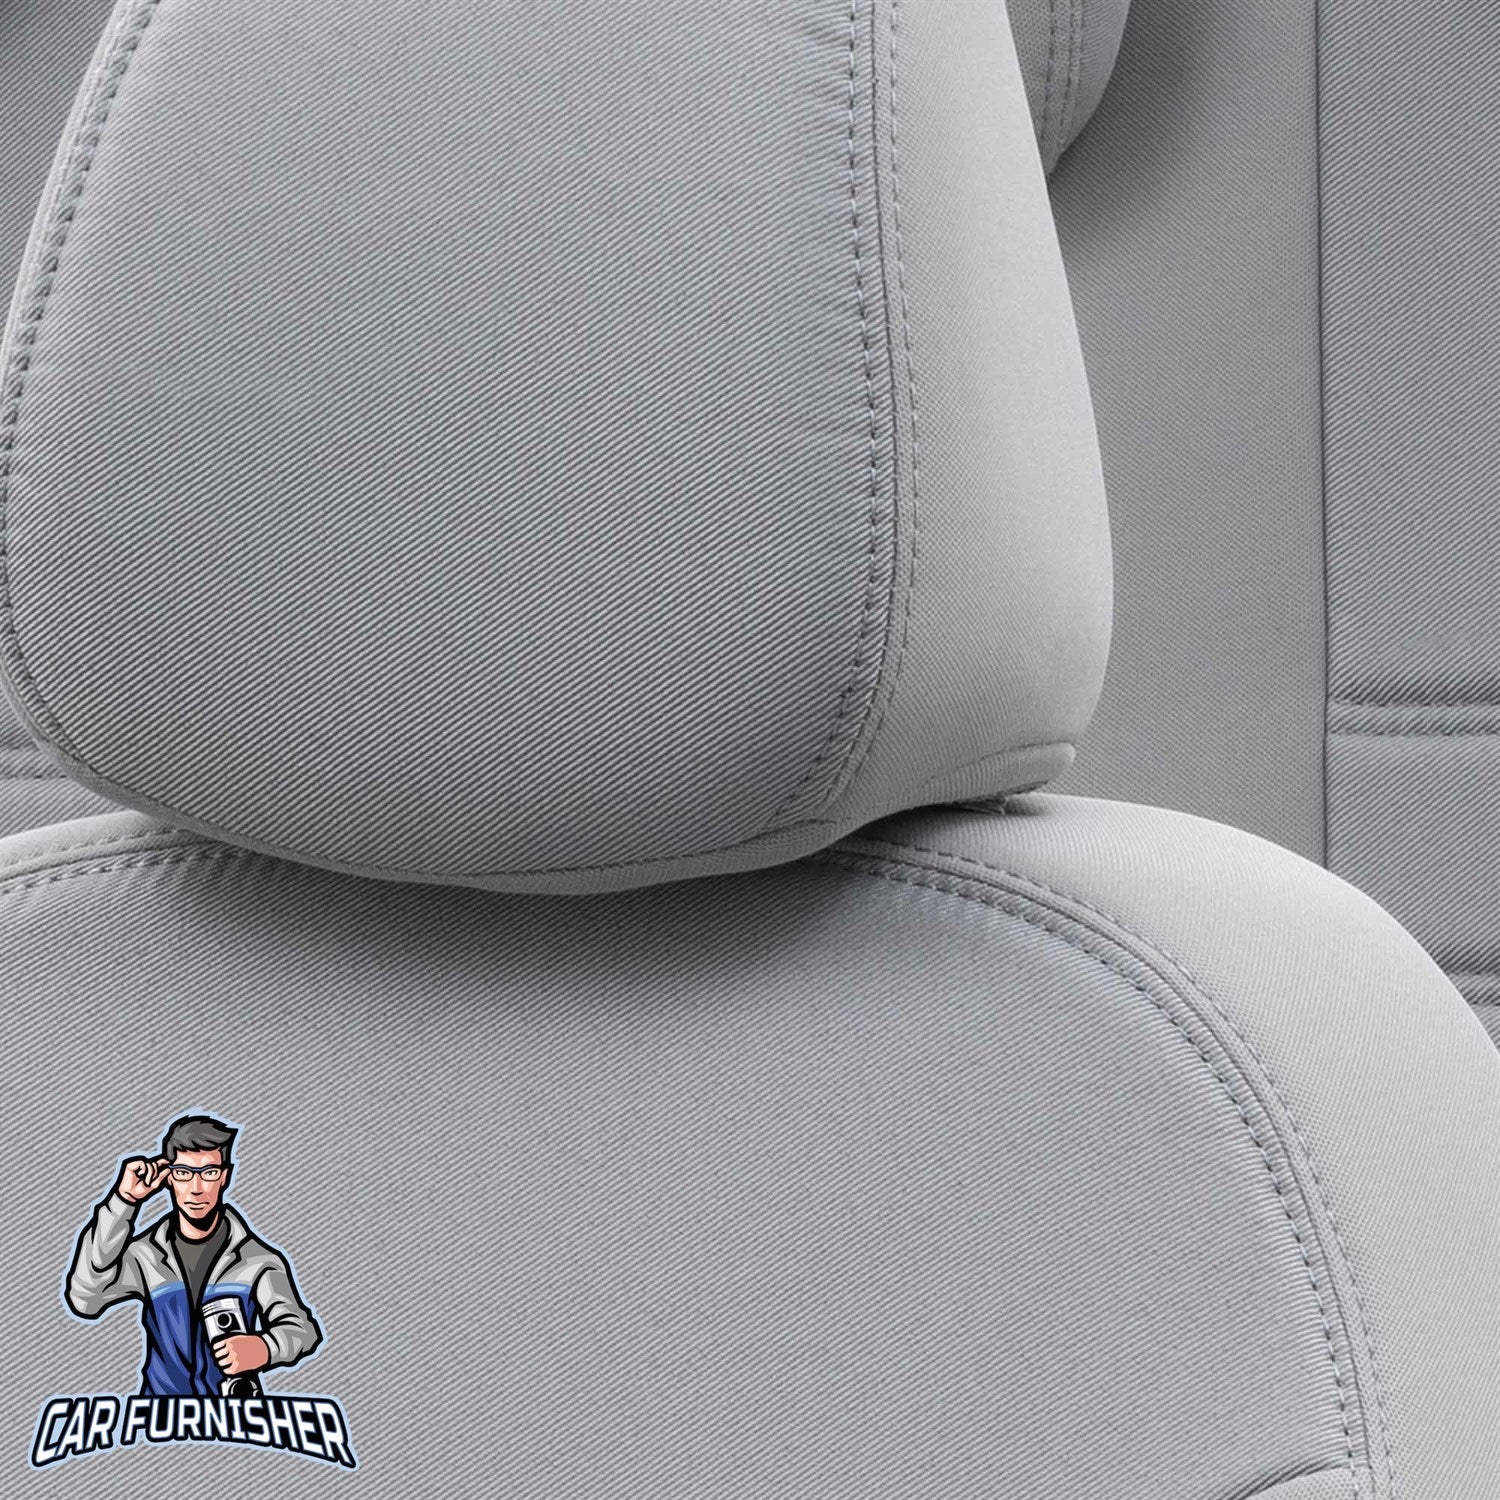 Man TGE Seat Covers Original Jacquard Design Light Gray Jacquard Fabric